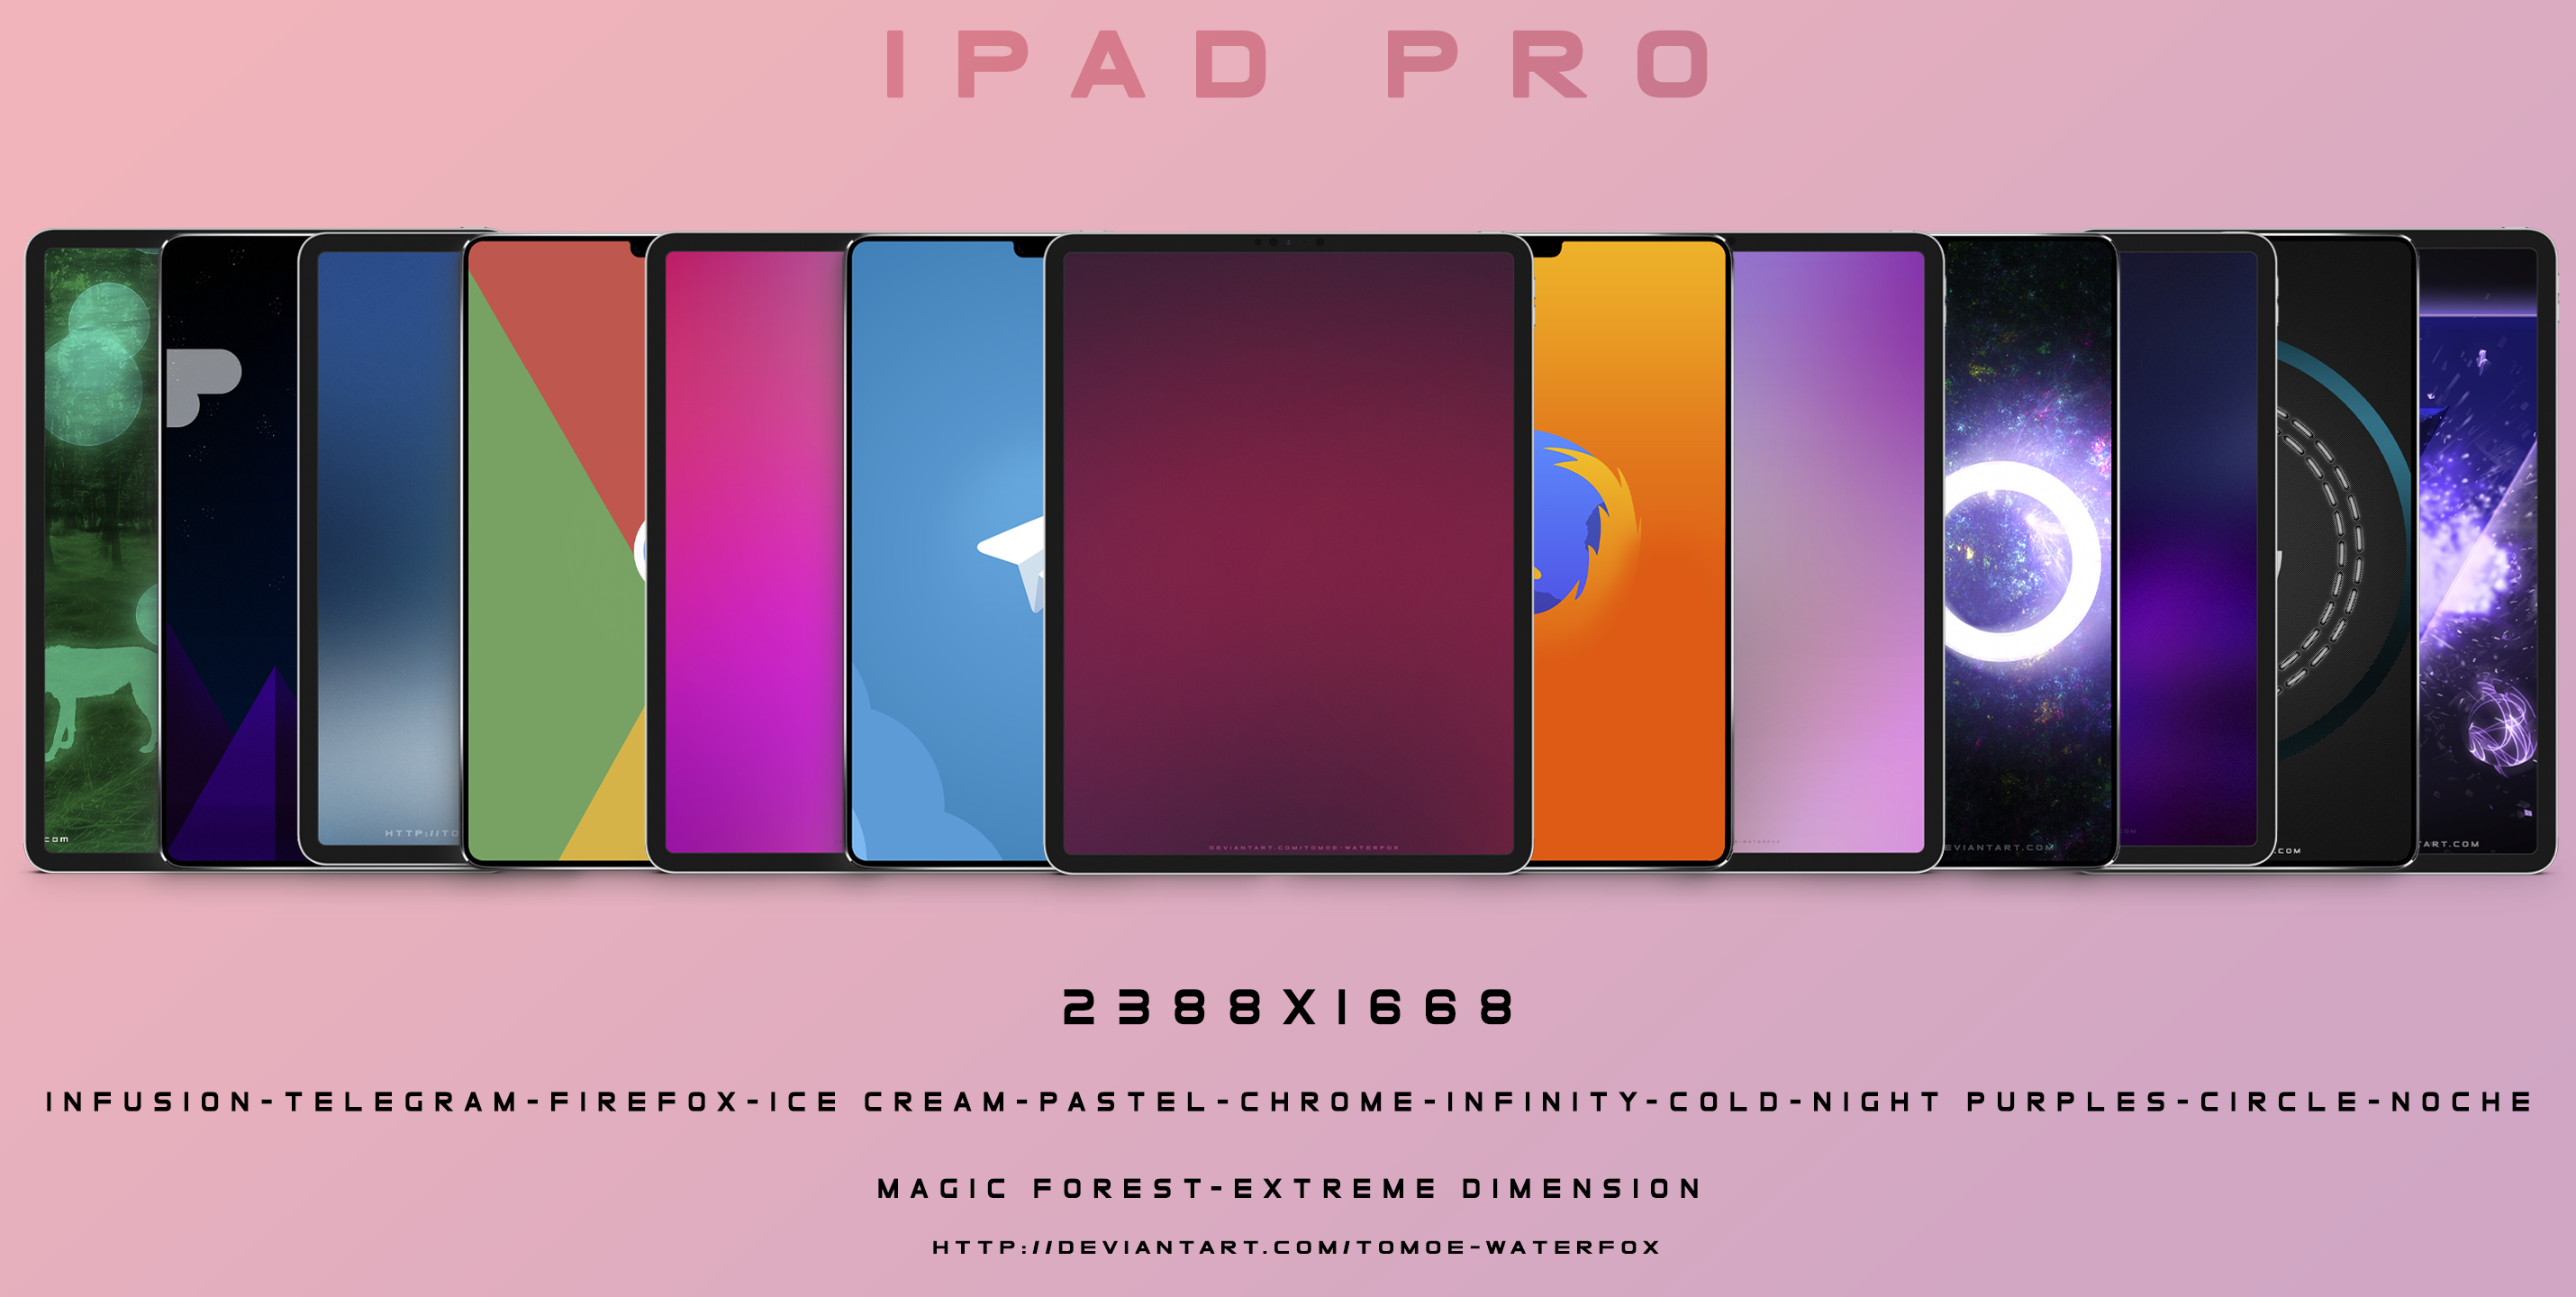 Ipad Pro 2018 Wallpaper Pack By Tomoe Waterfox On Deviantart